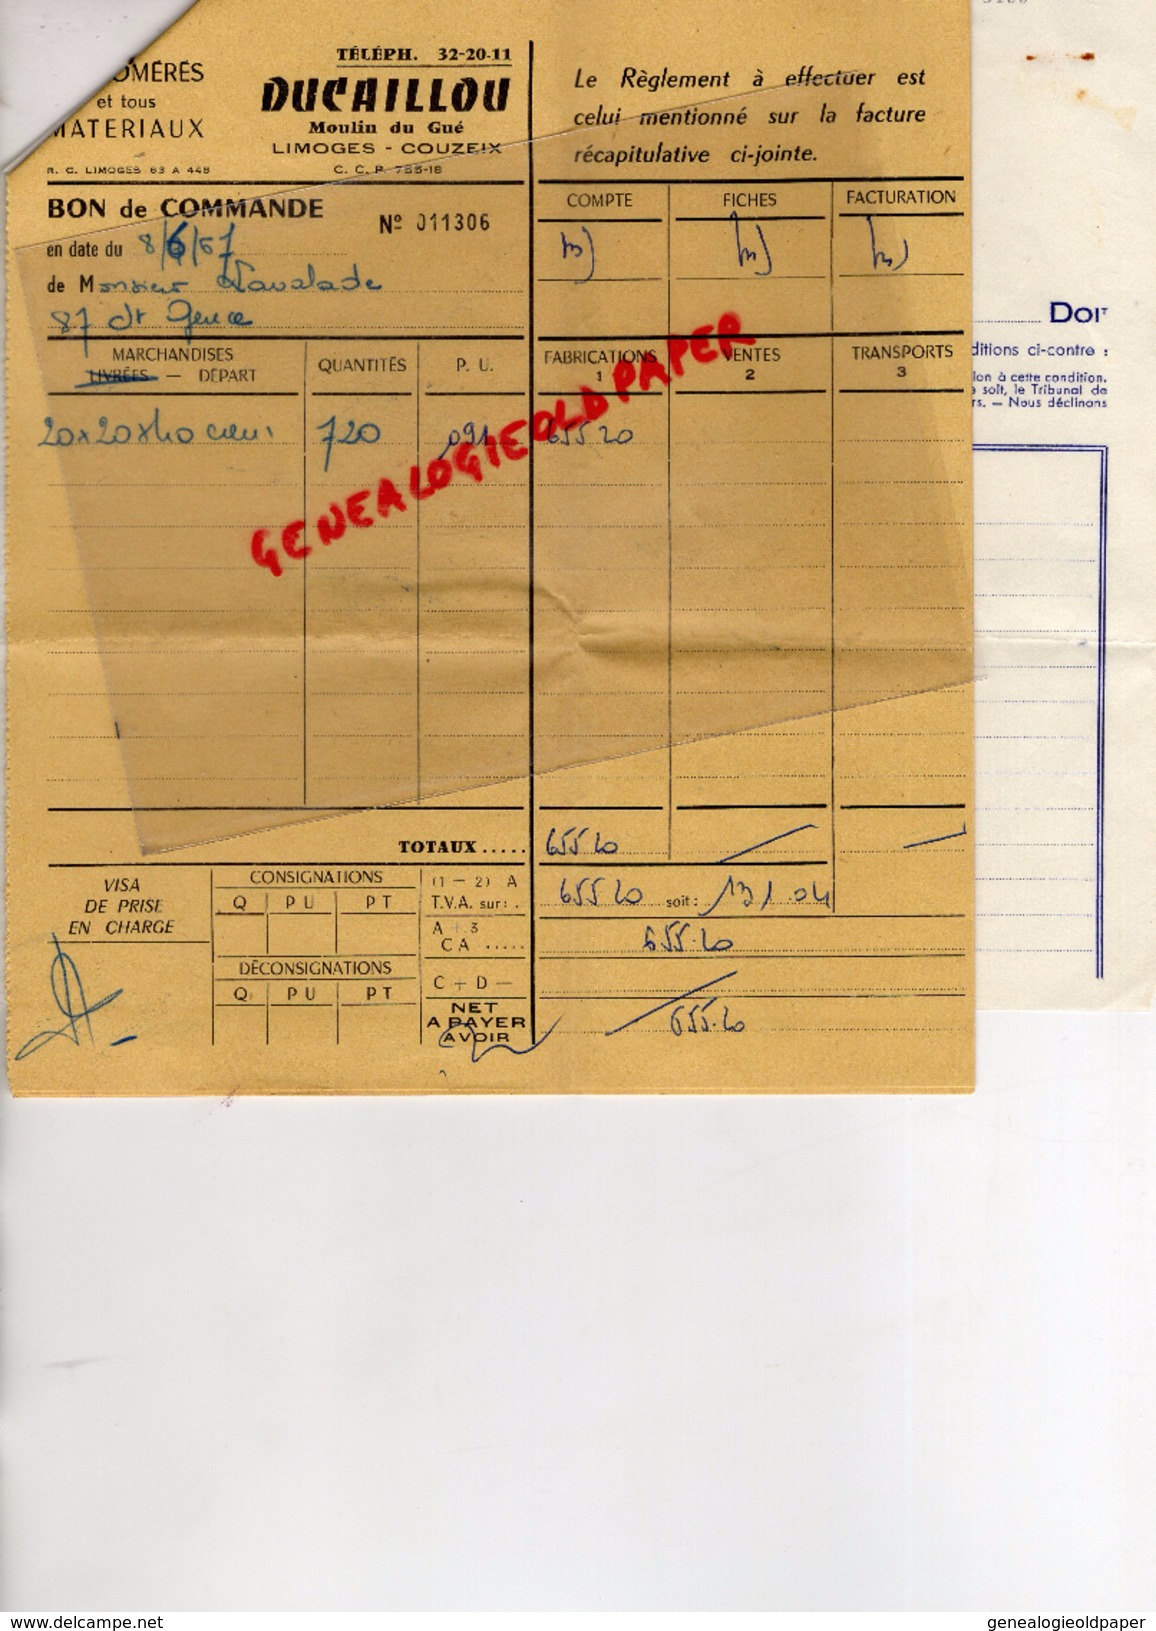 87 - LIMOGES - FACTURE ADRIEN DUCAILLOU - MOULIN DU GUE - FABRICATION AGGLOMERES - 1967 - 1950 - ...